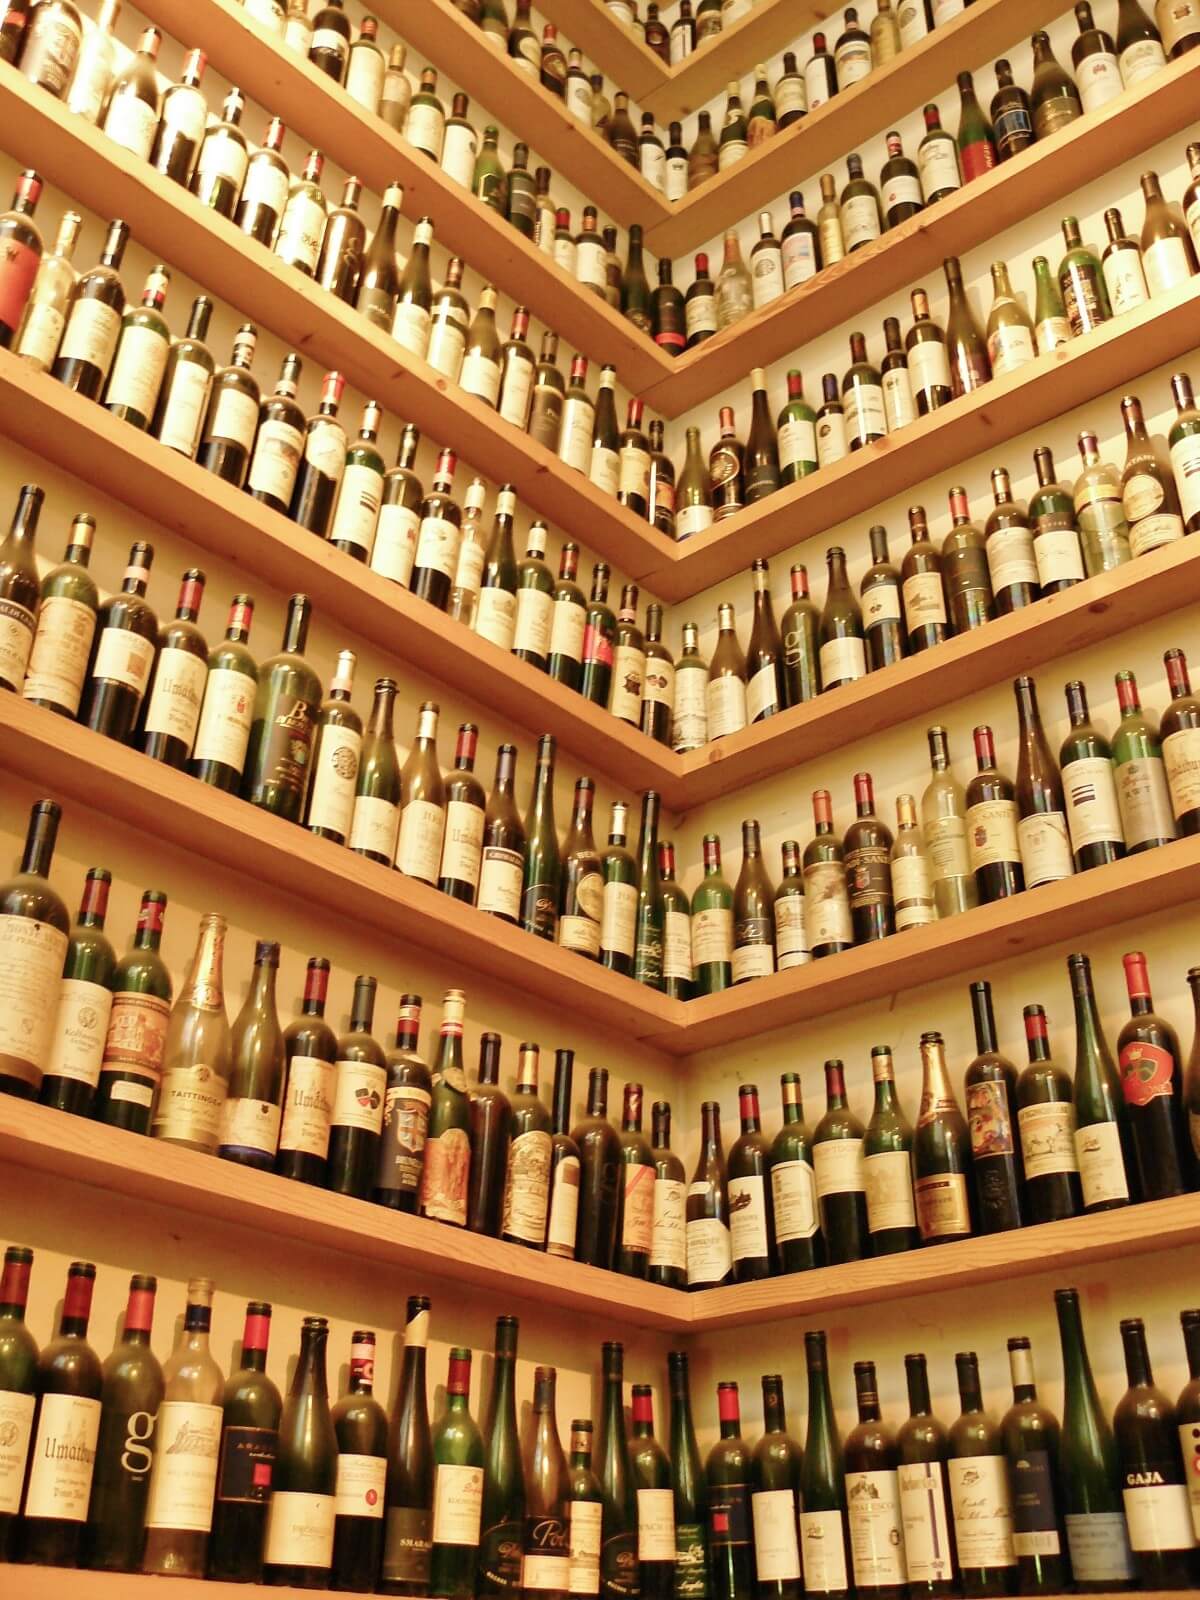 wine_bottles_wine_rack_wine_bottle_range_bottles_wines_wine_sale_rarity_storage-1100923